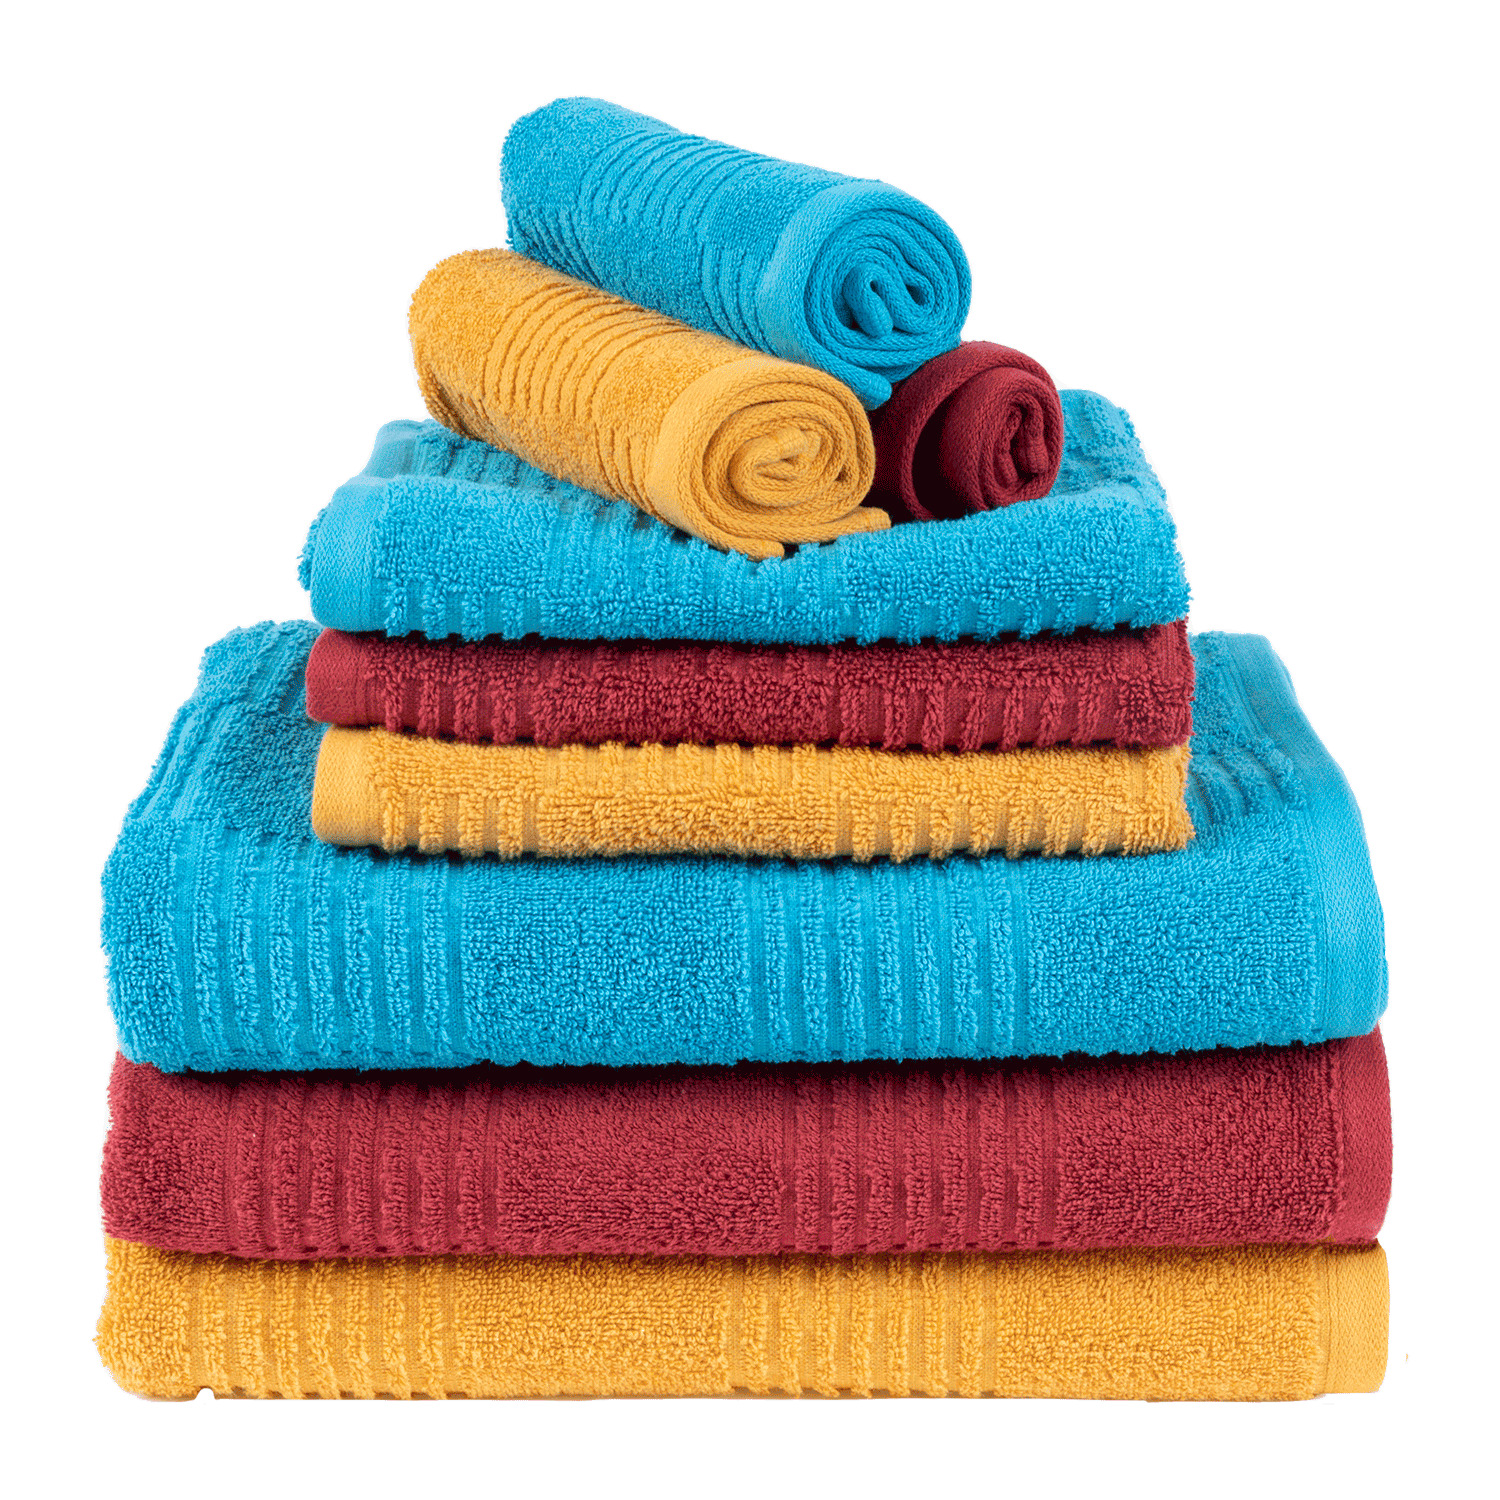 BELLINO Collection - Vibrant cotton bath towel